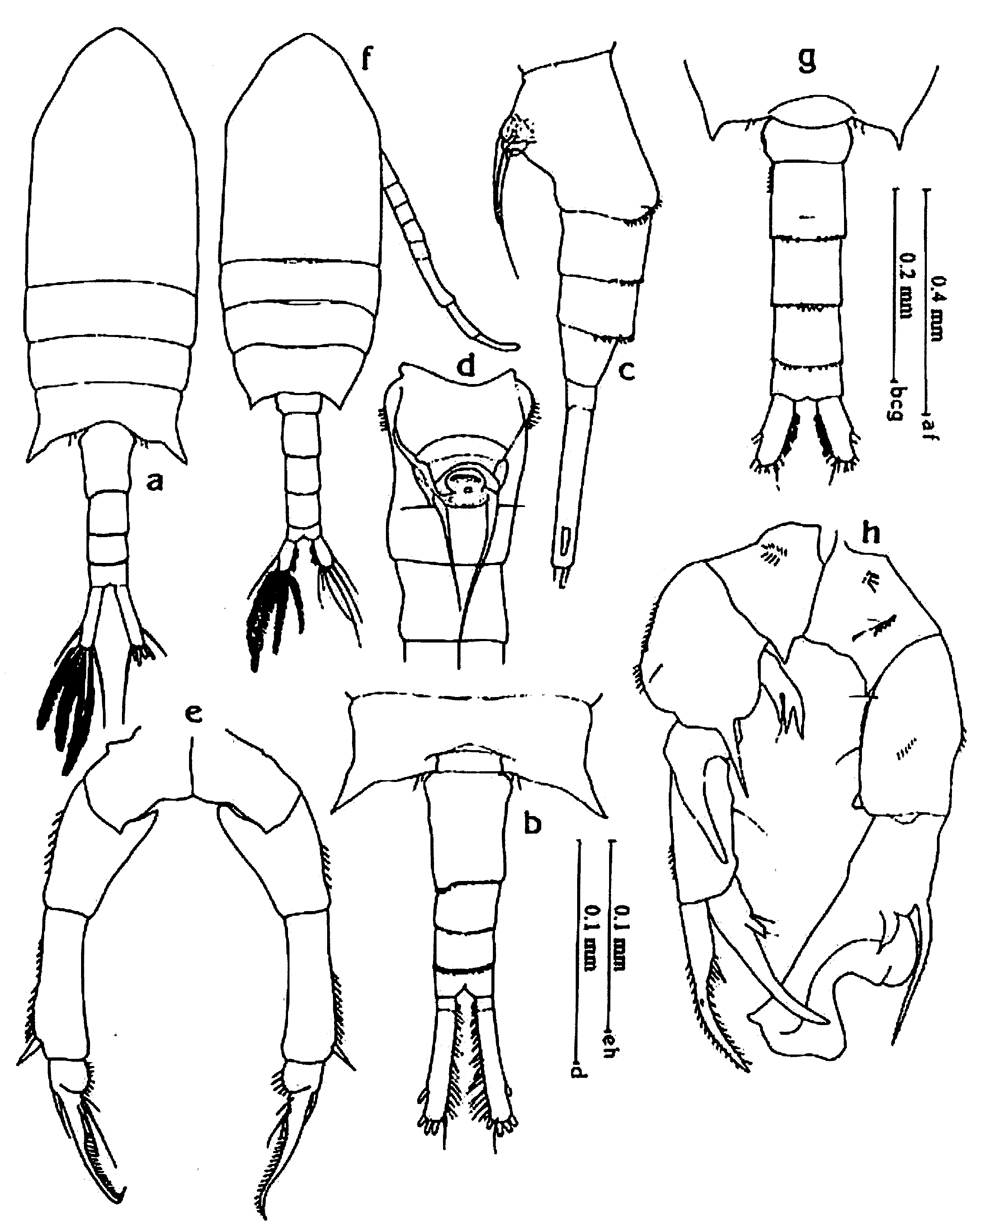 Species Pseudodiaptomus incisus - Plate 2 of morphological figures